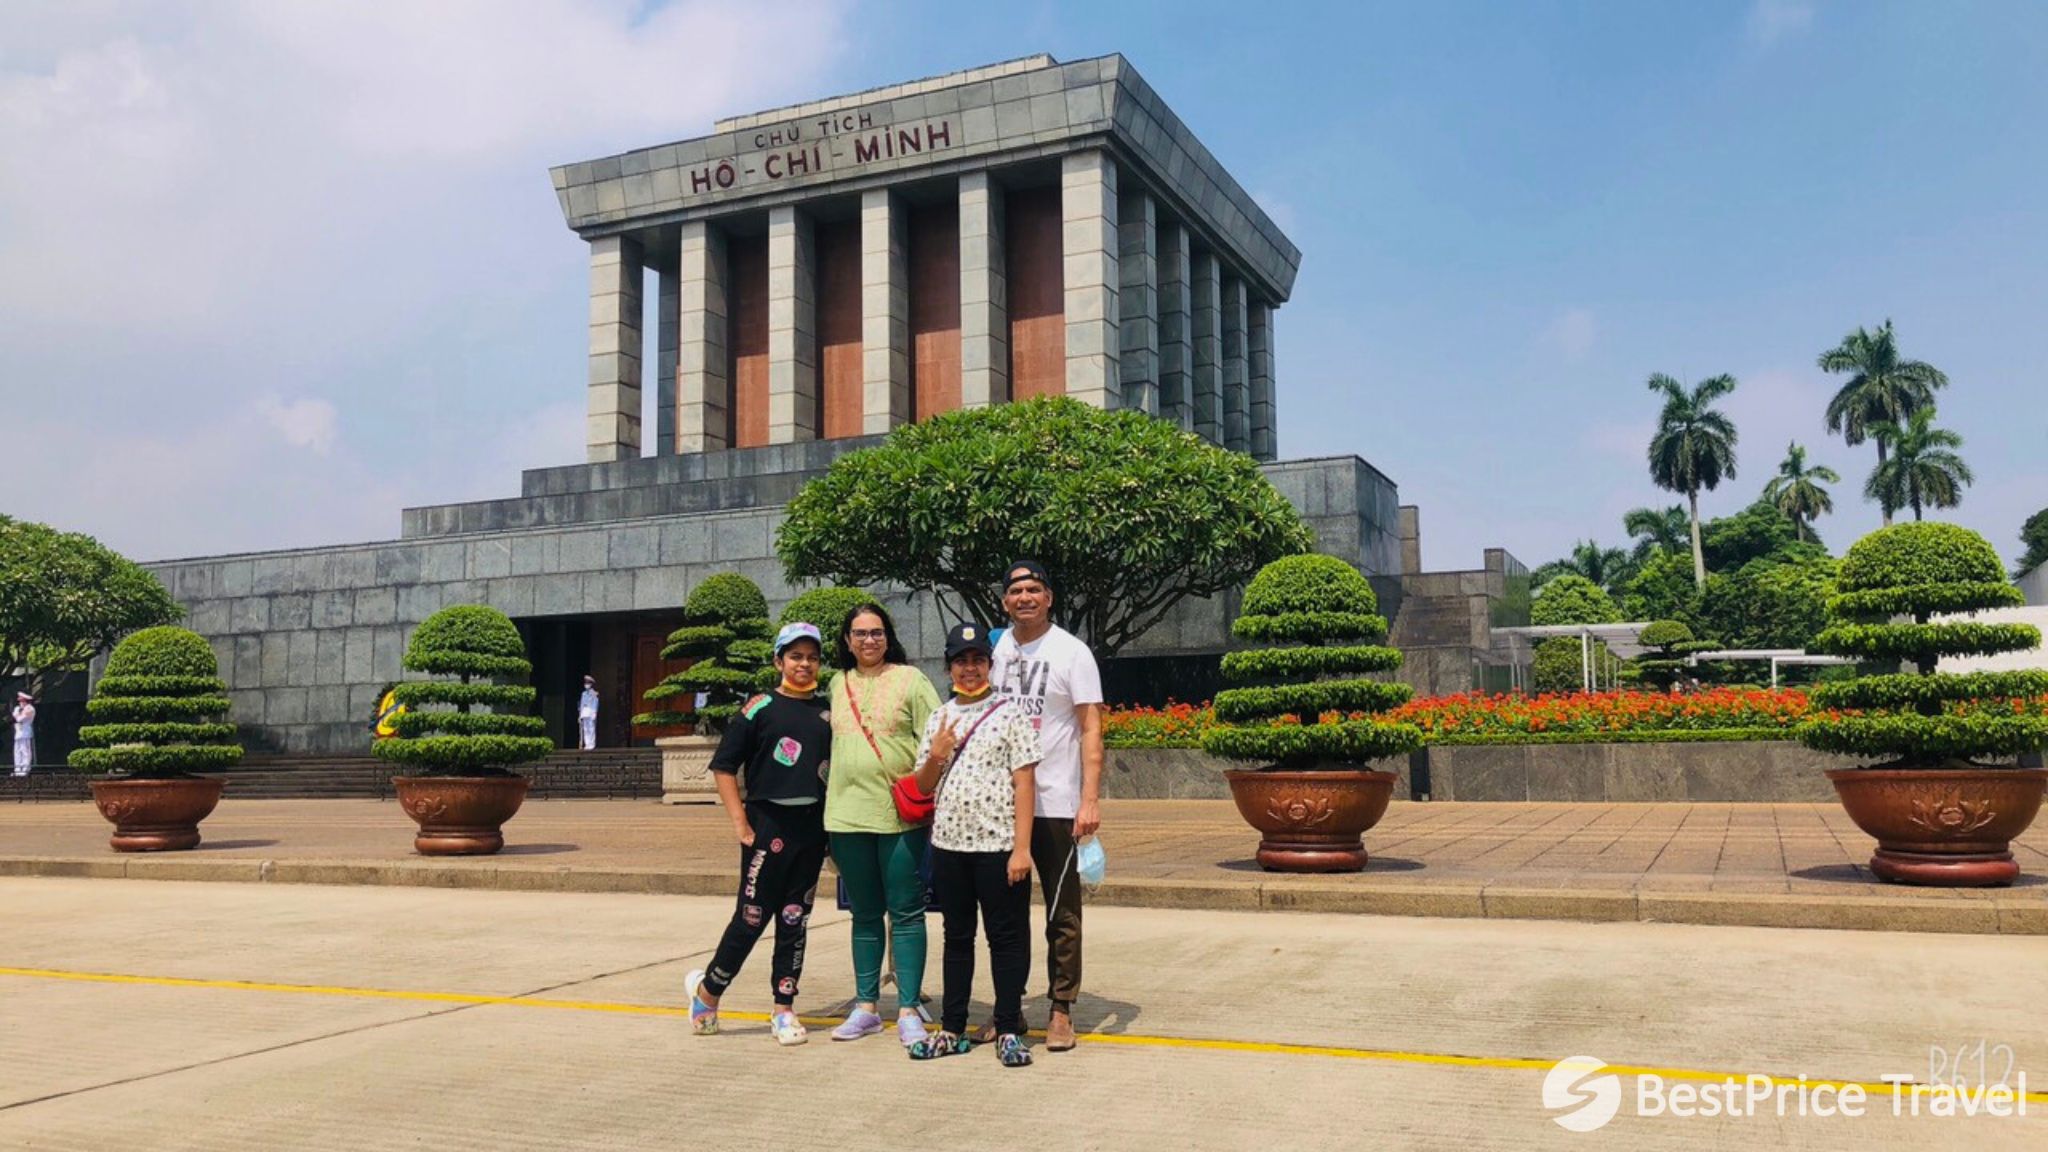 Day 2 Visit The Ho Chi Minh Mausoleum